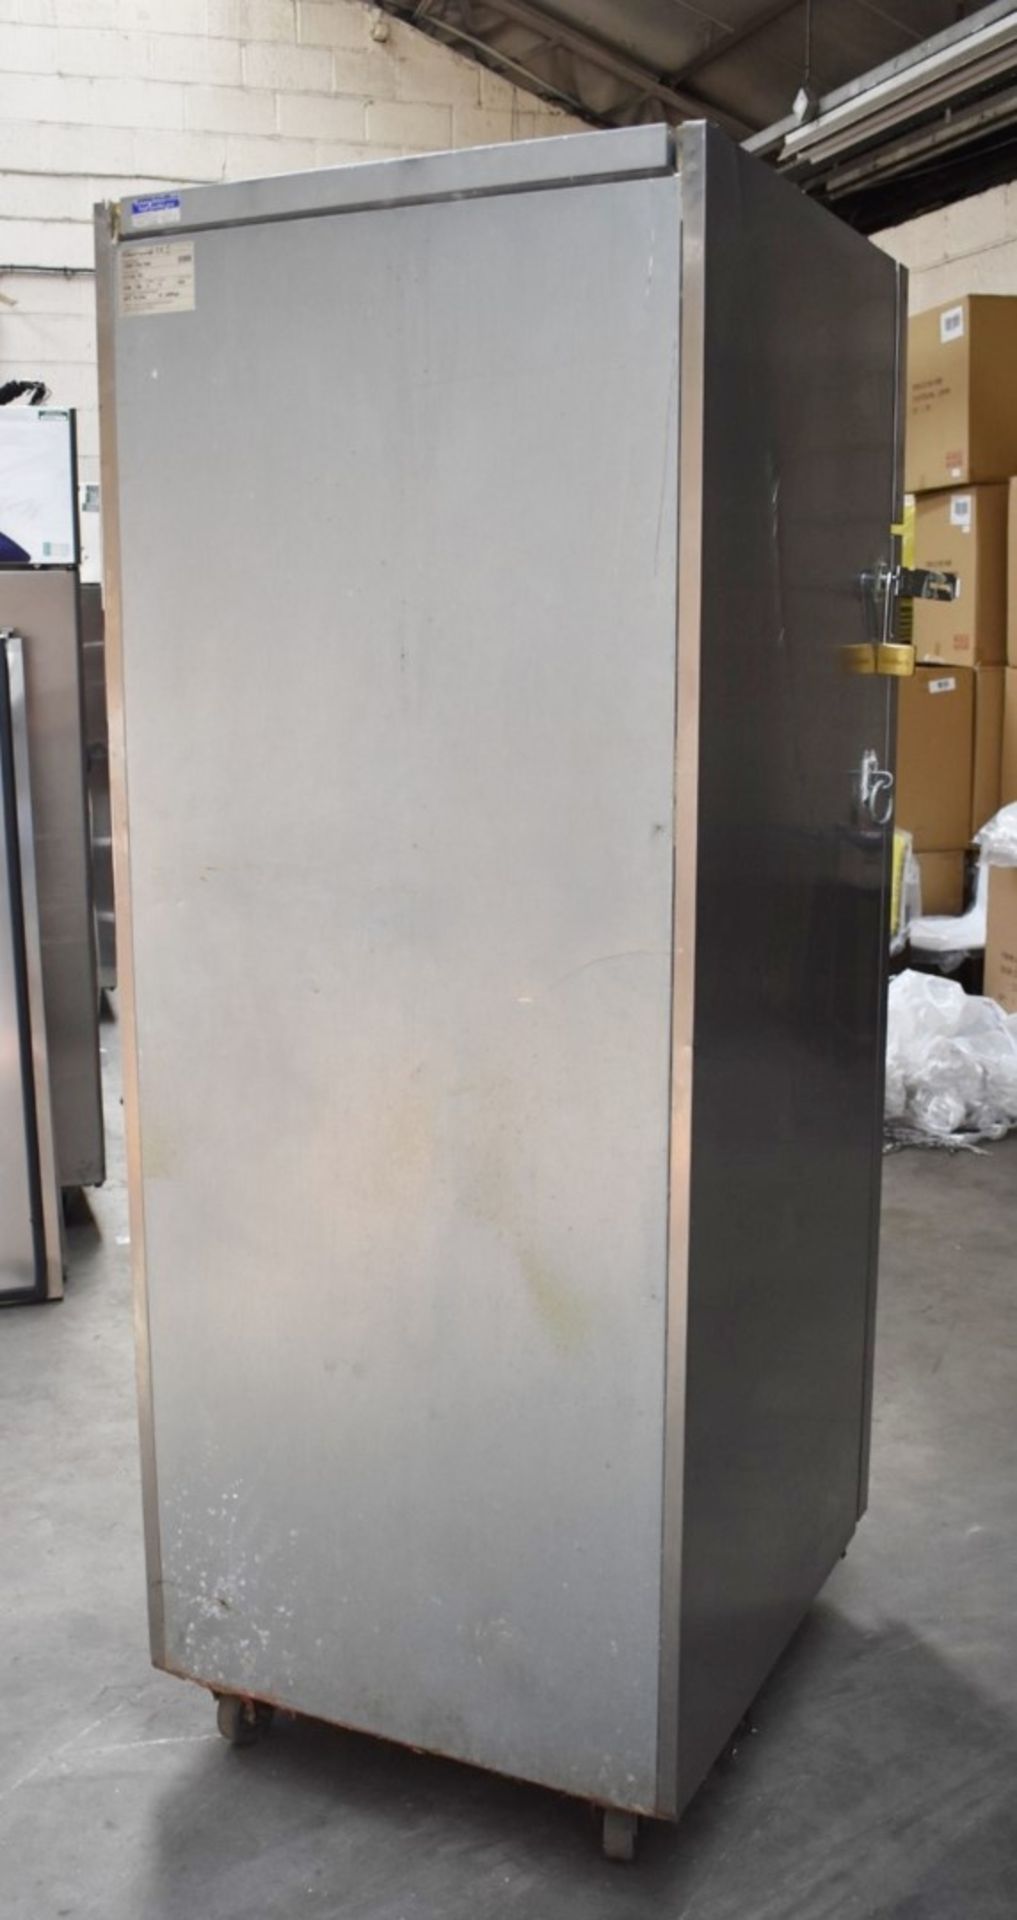 1 x Williams Jade Upright Single Door Refrigerator With Stainless Steel Exterior - Model HJ1TSA - - Image 5 of 11